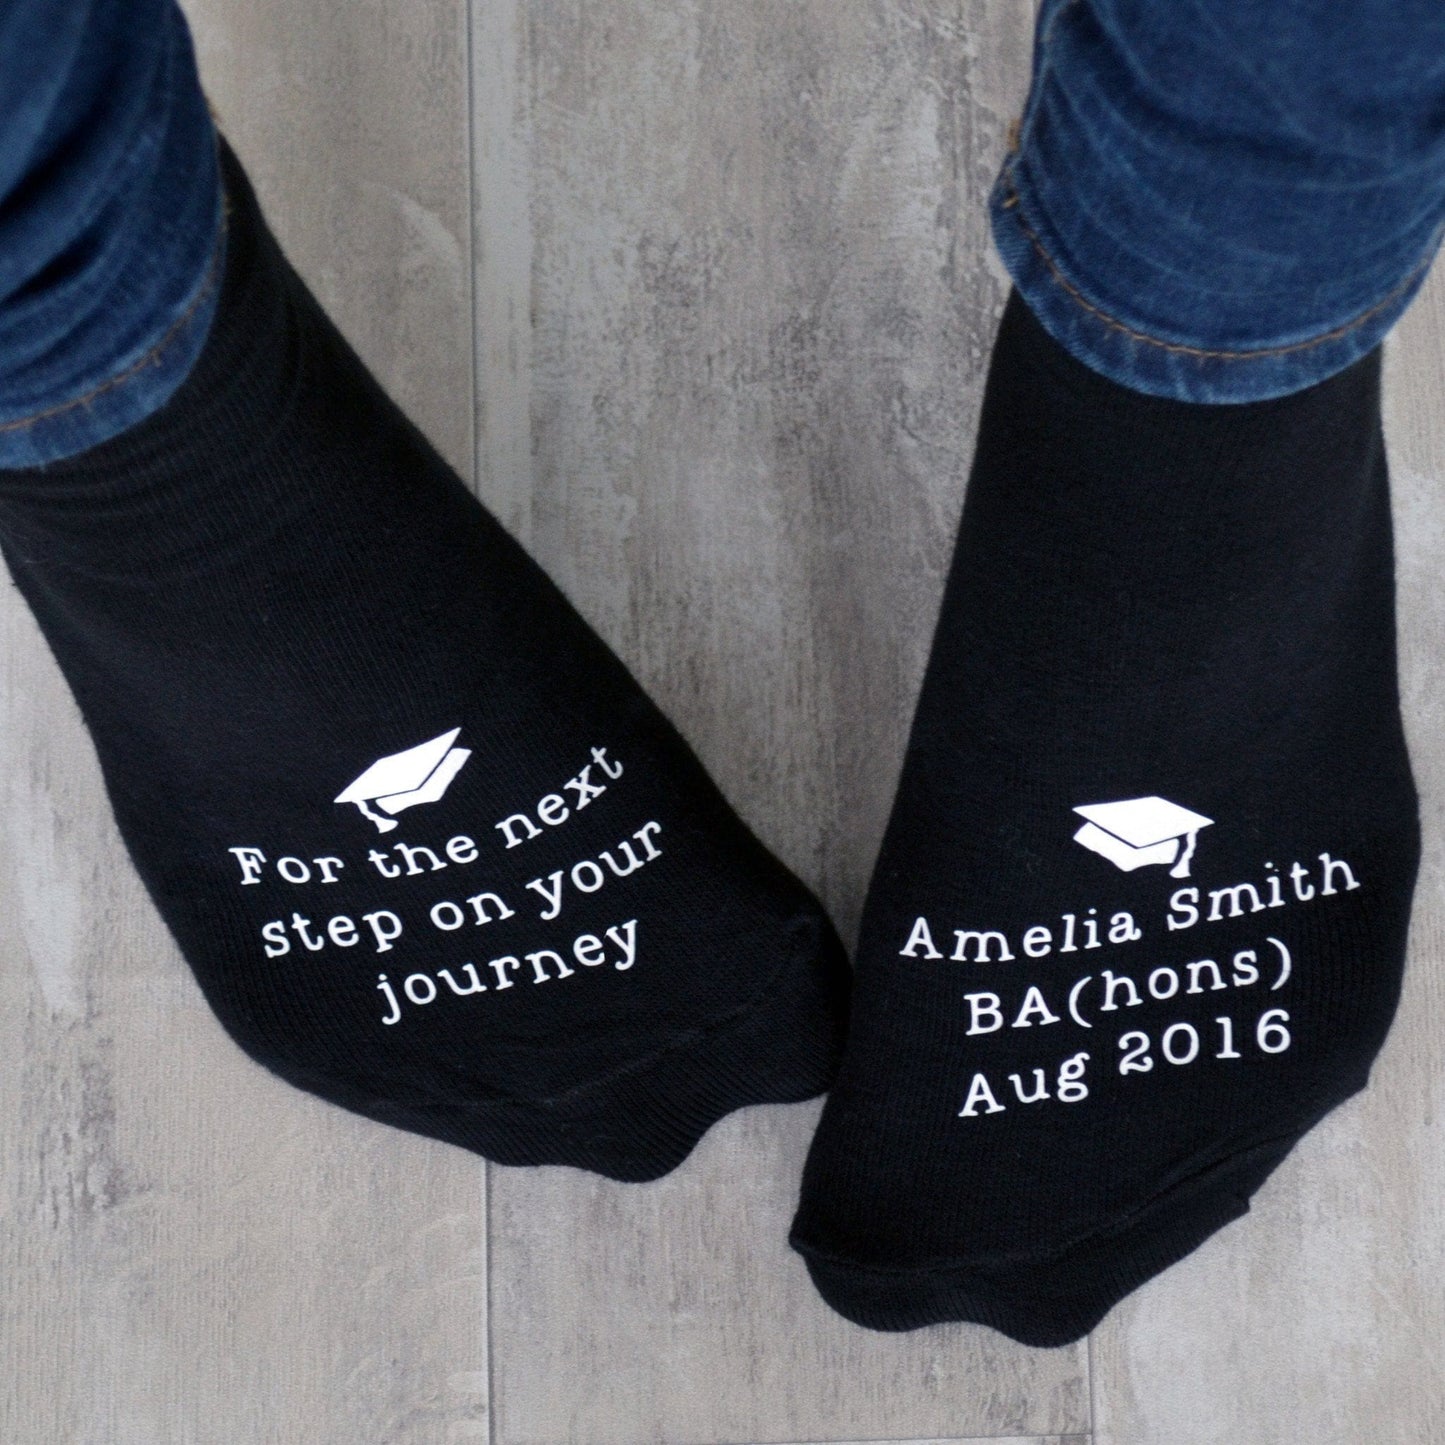 Next Step On Your Journey Graduation Socks, socks, - ALPHS 